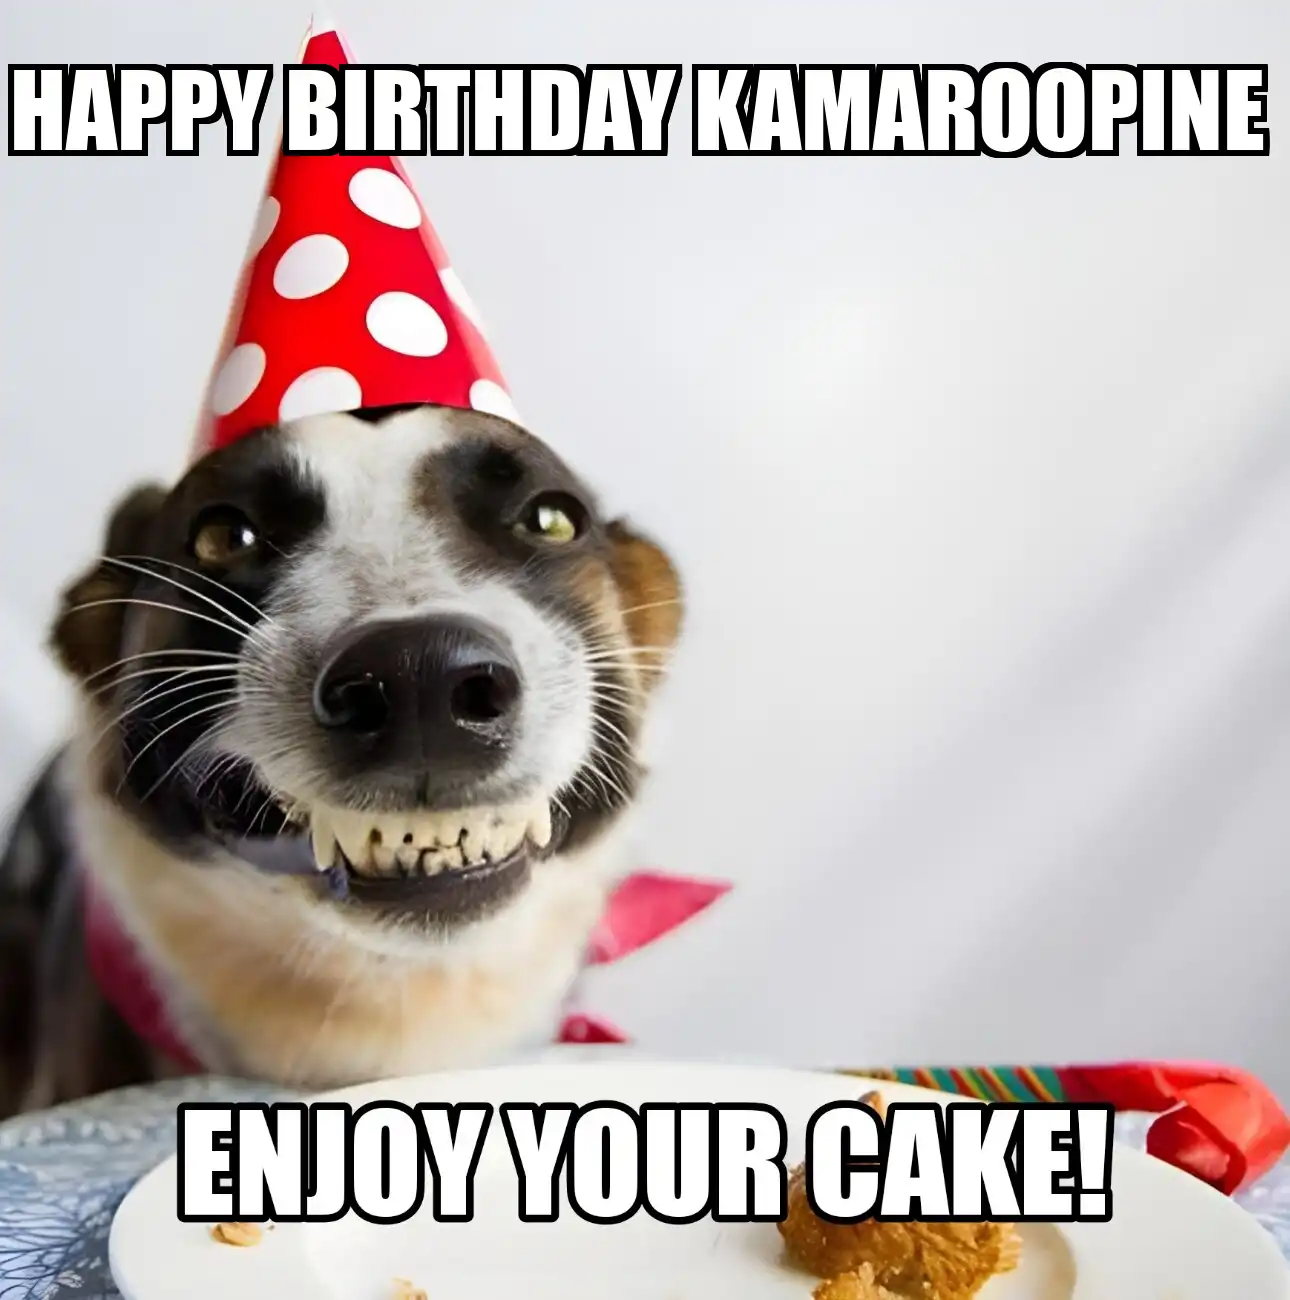 Happy Birthday Kamaroopine Enjoy Your Cake Dog Meme